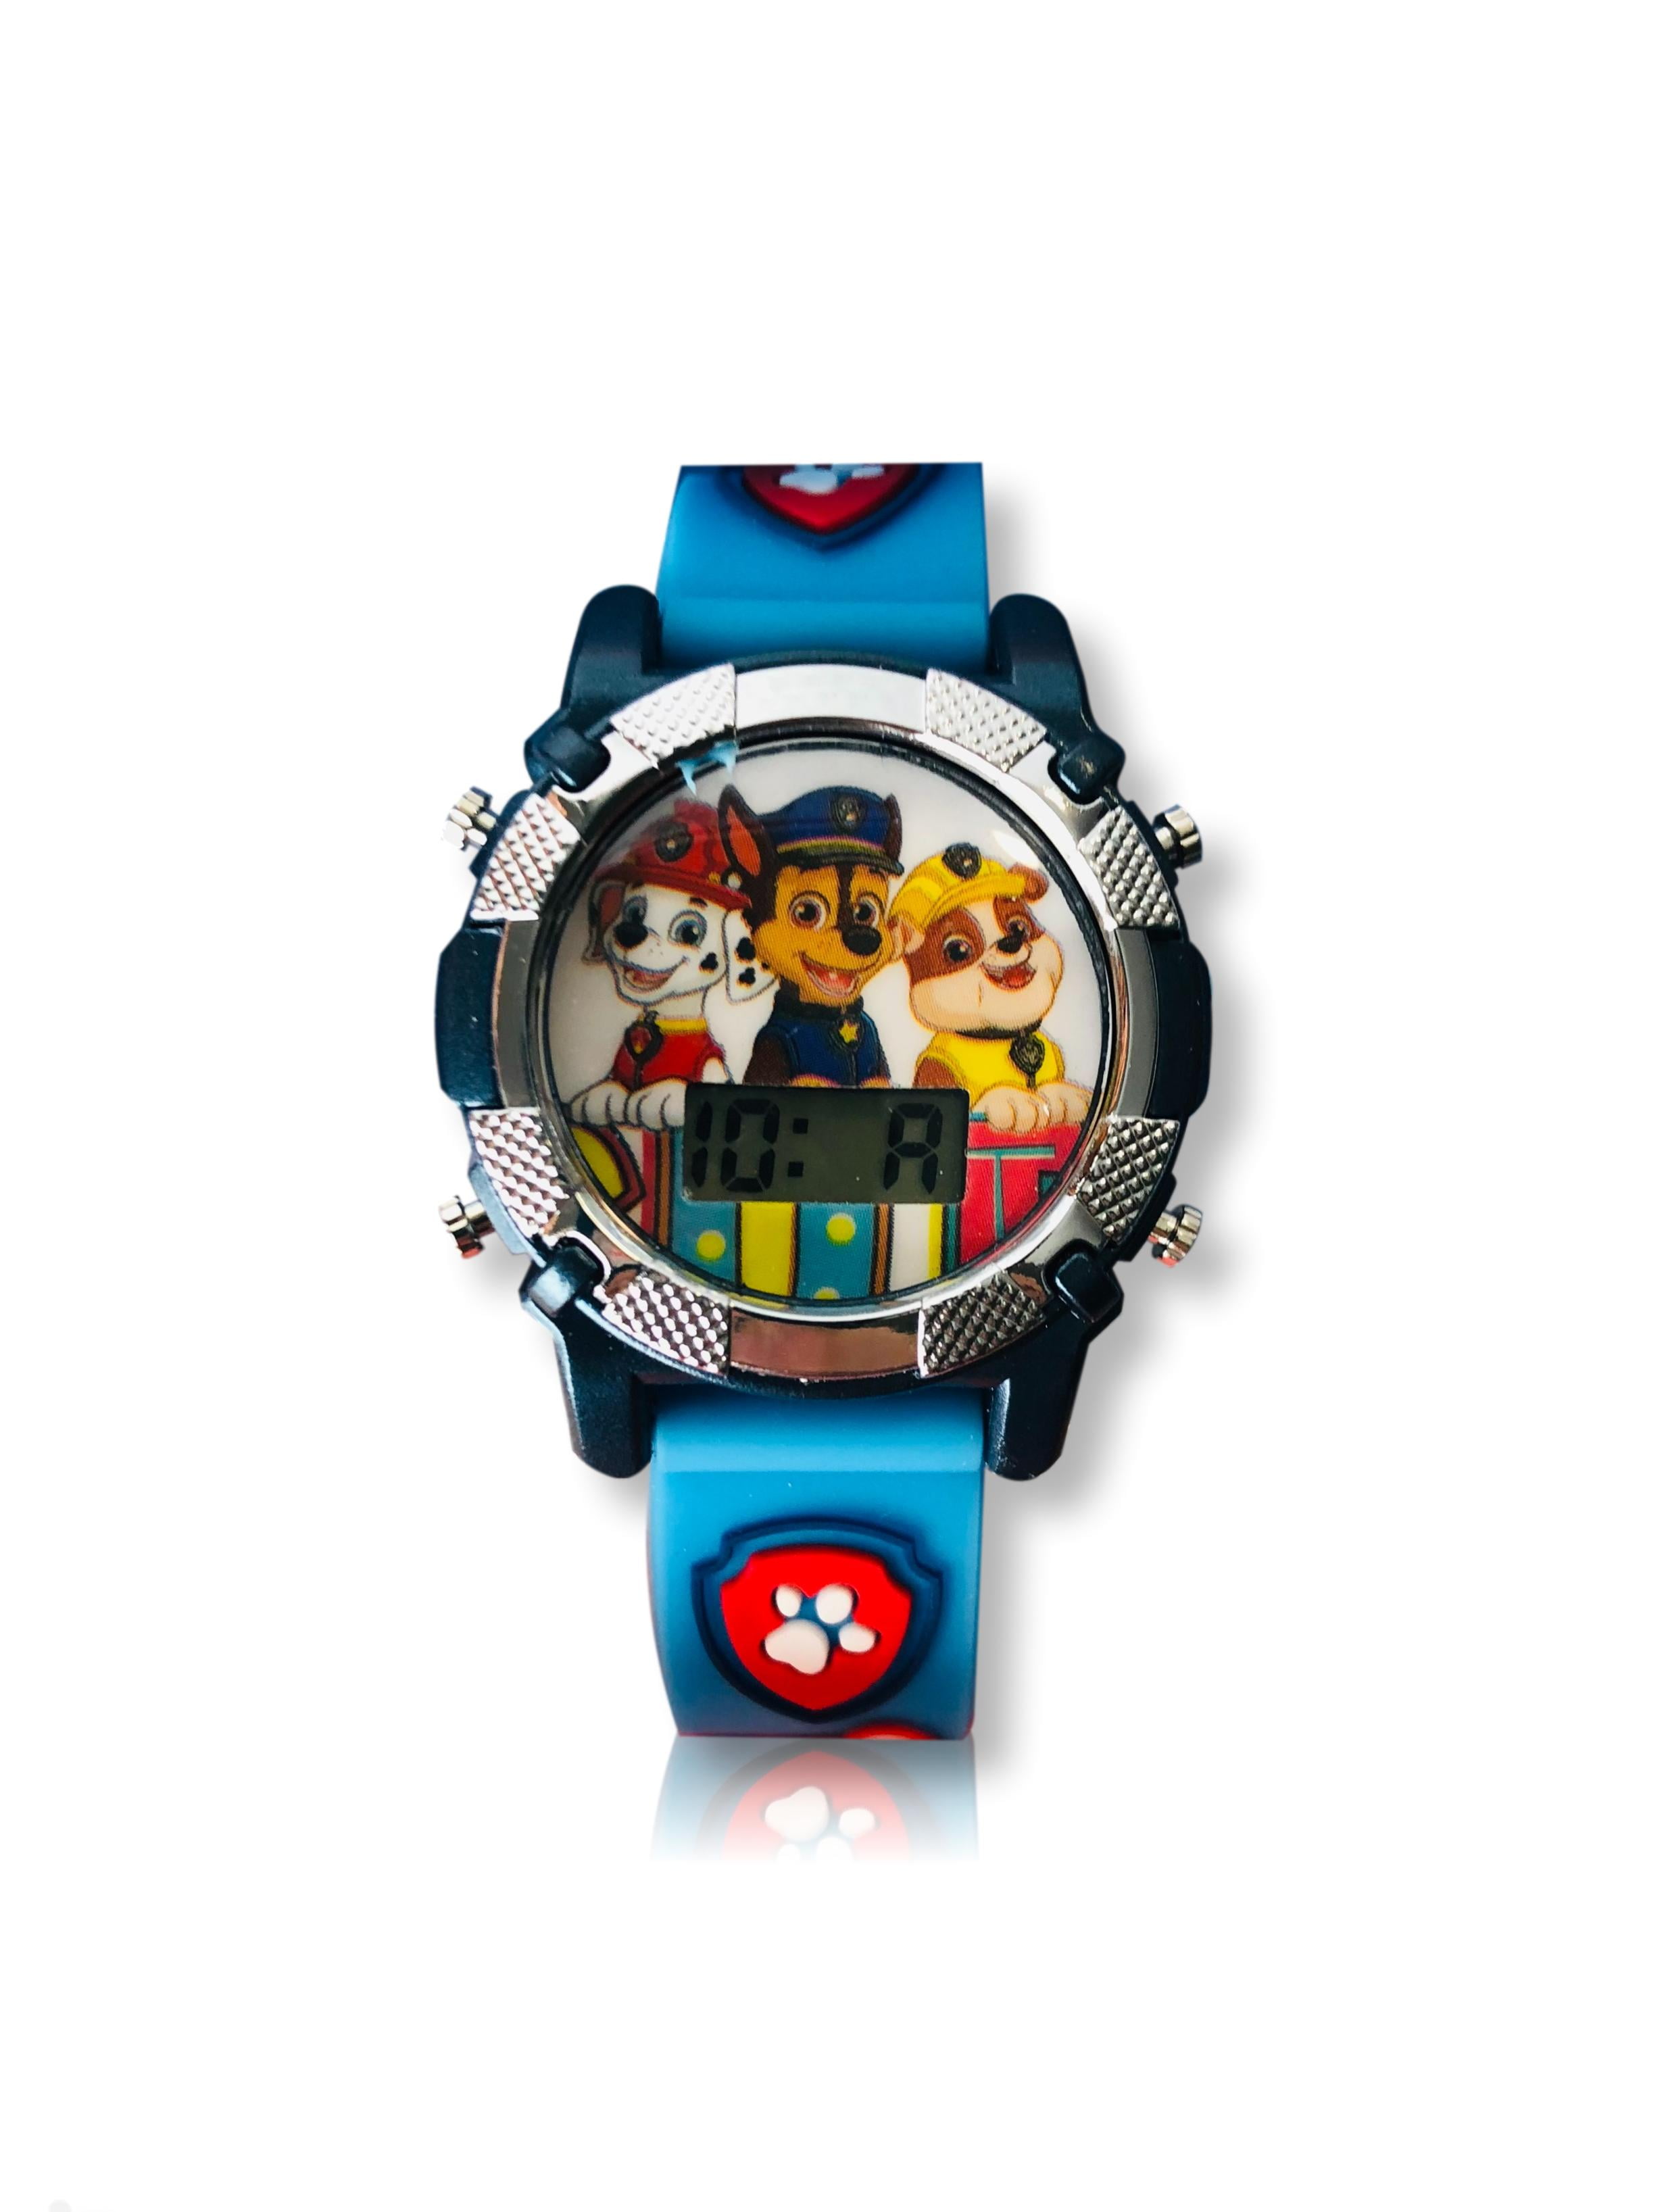 Nickelodeon Paw Patrol Metallic Light Up Kids LCD Watch in Blue - PAW4347WM